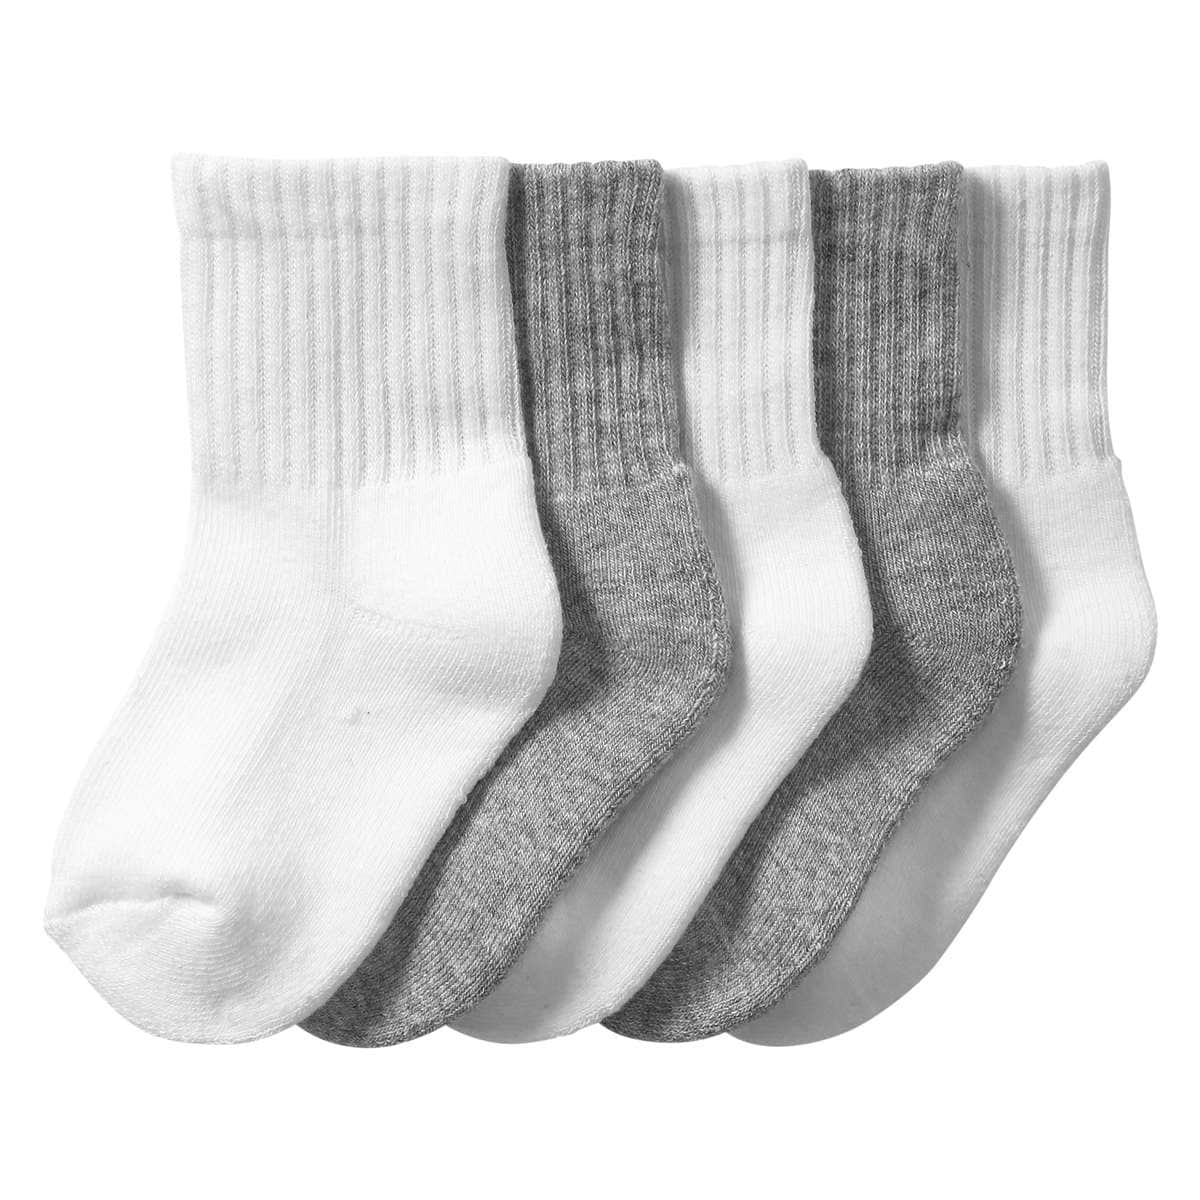 Baby 5 Pack Crew Socks in White from Joe Fresh